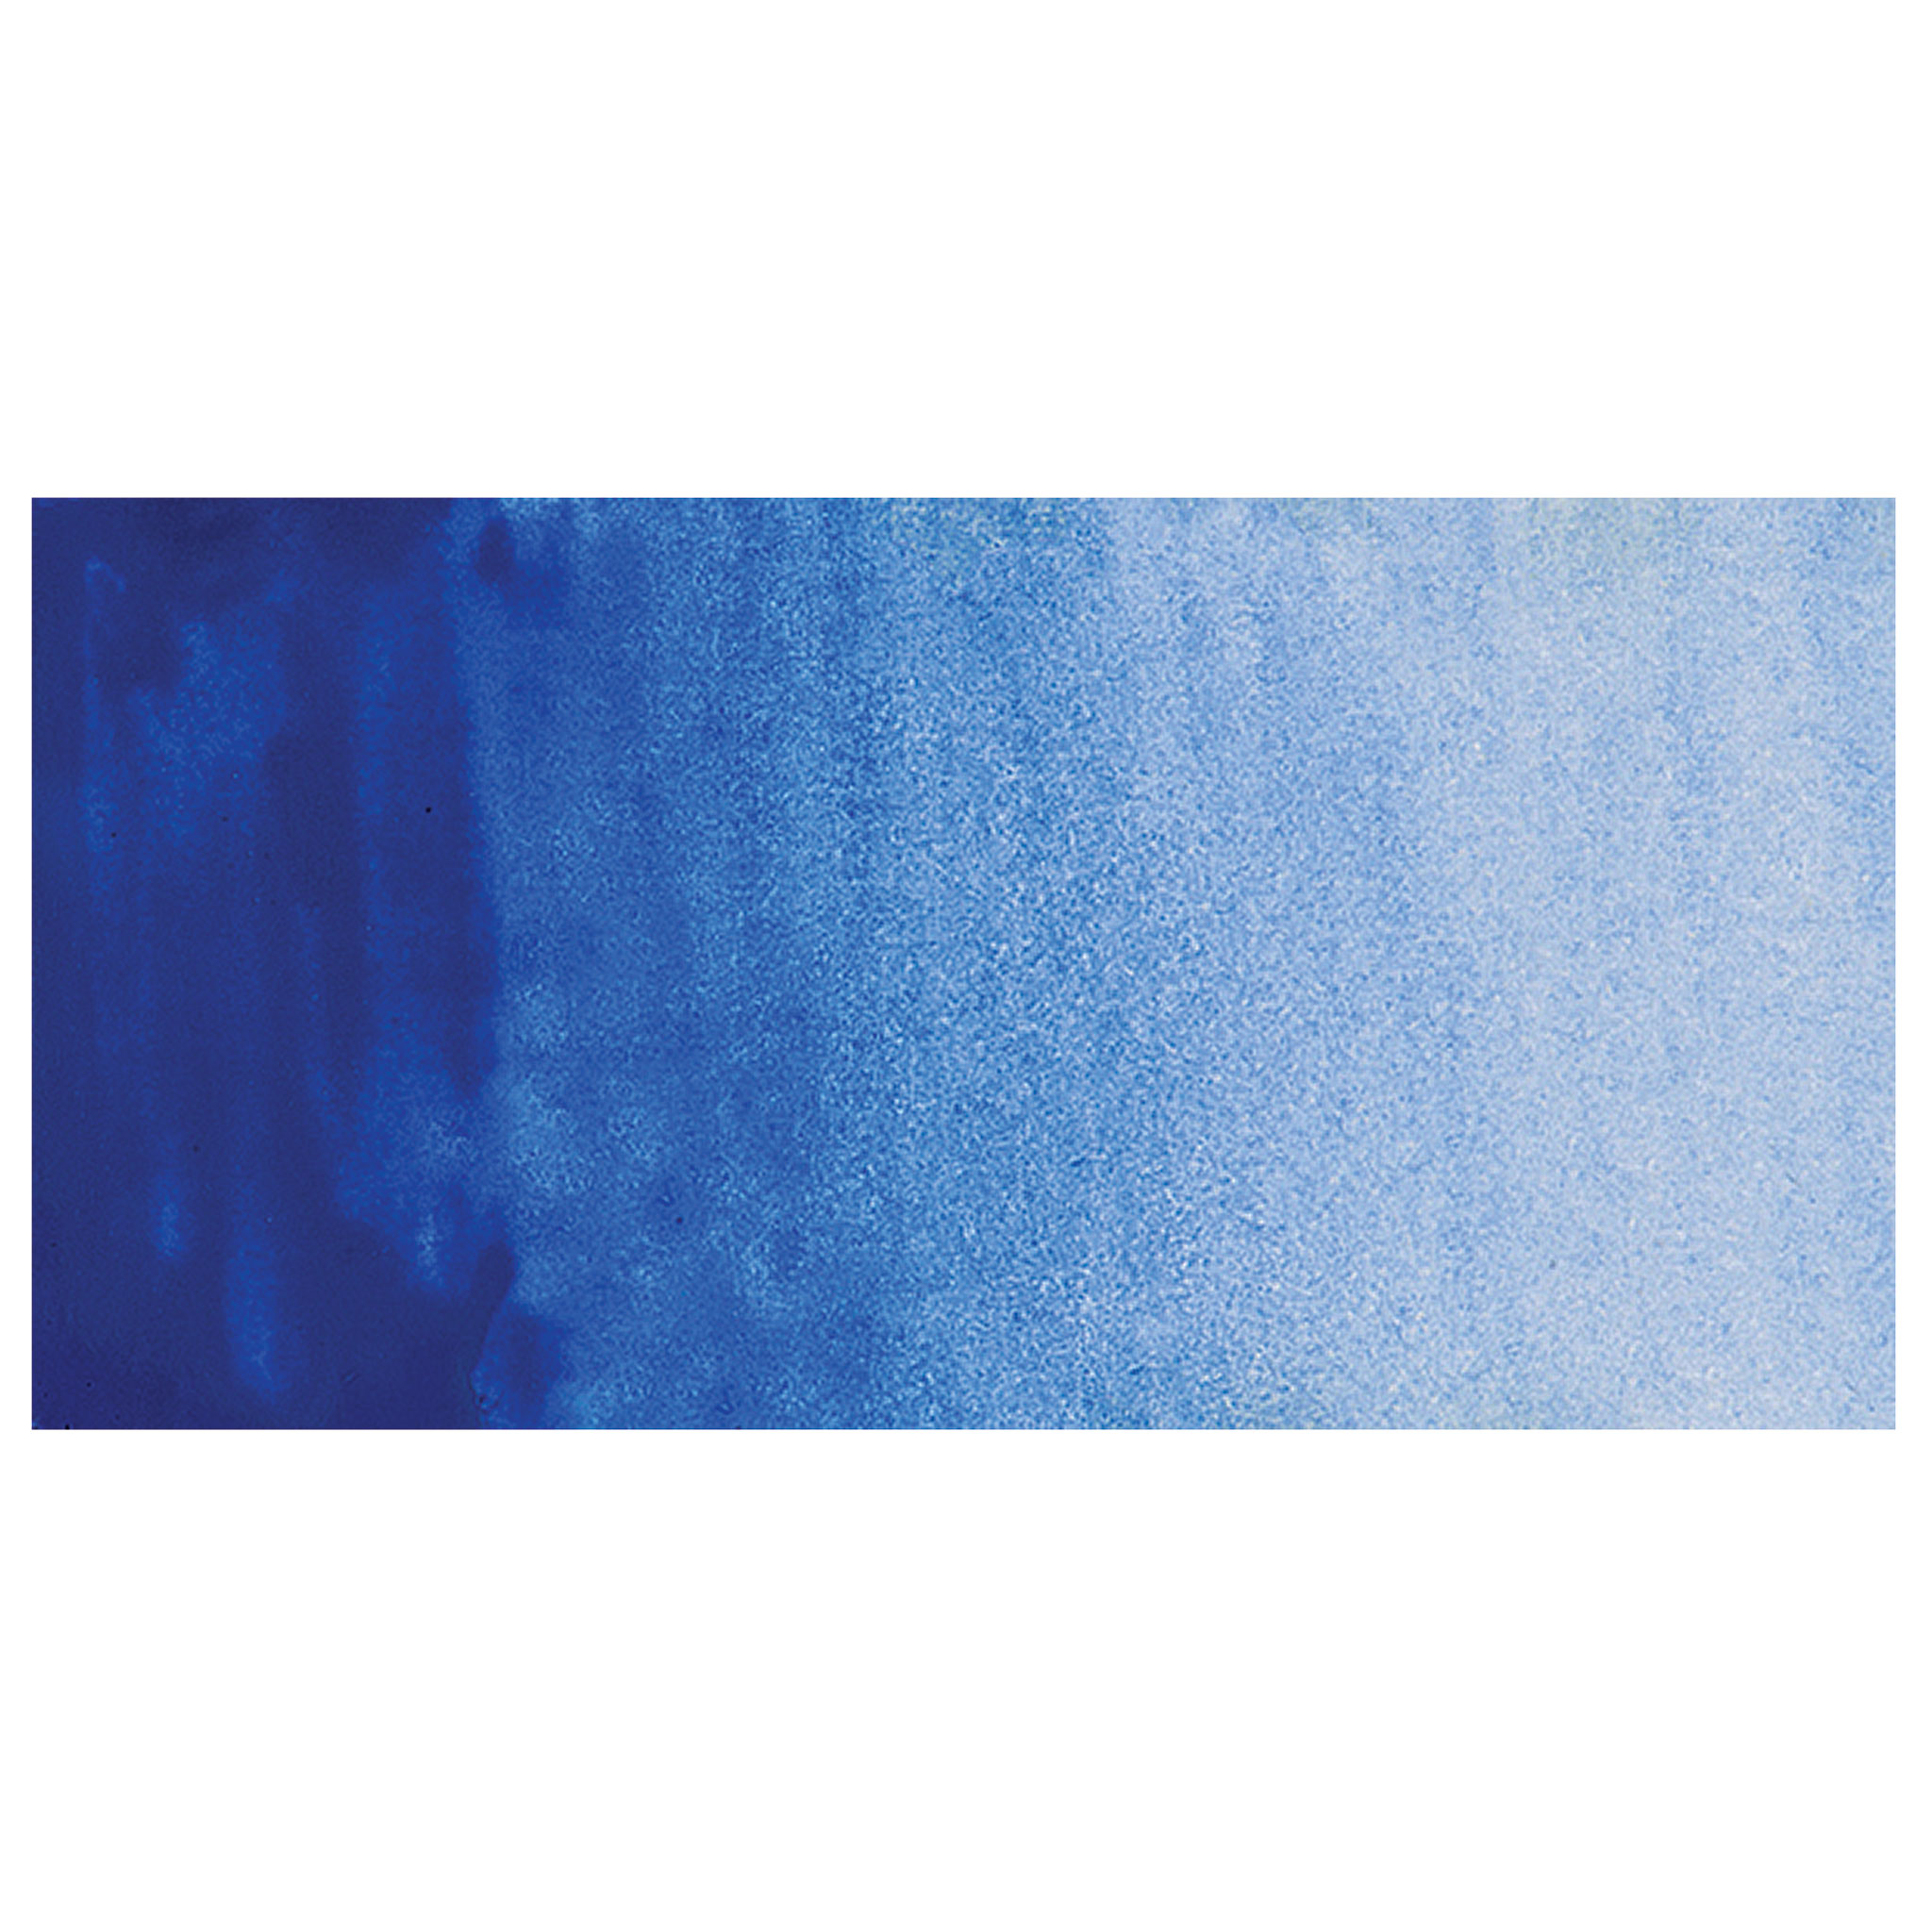 Sennelier French Artists' Watercolor - Cobalt Blue, 21 ml Tube, BLICK Art  Materials